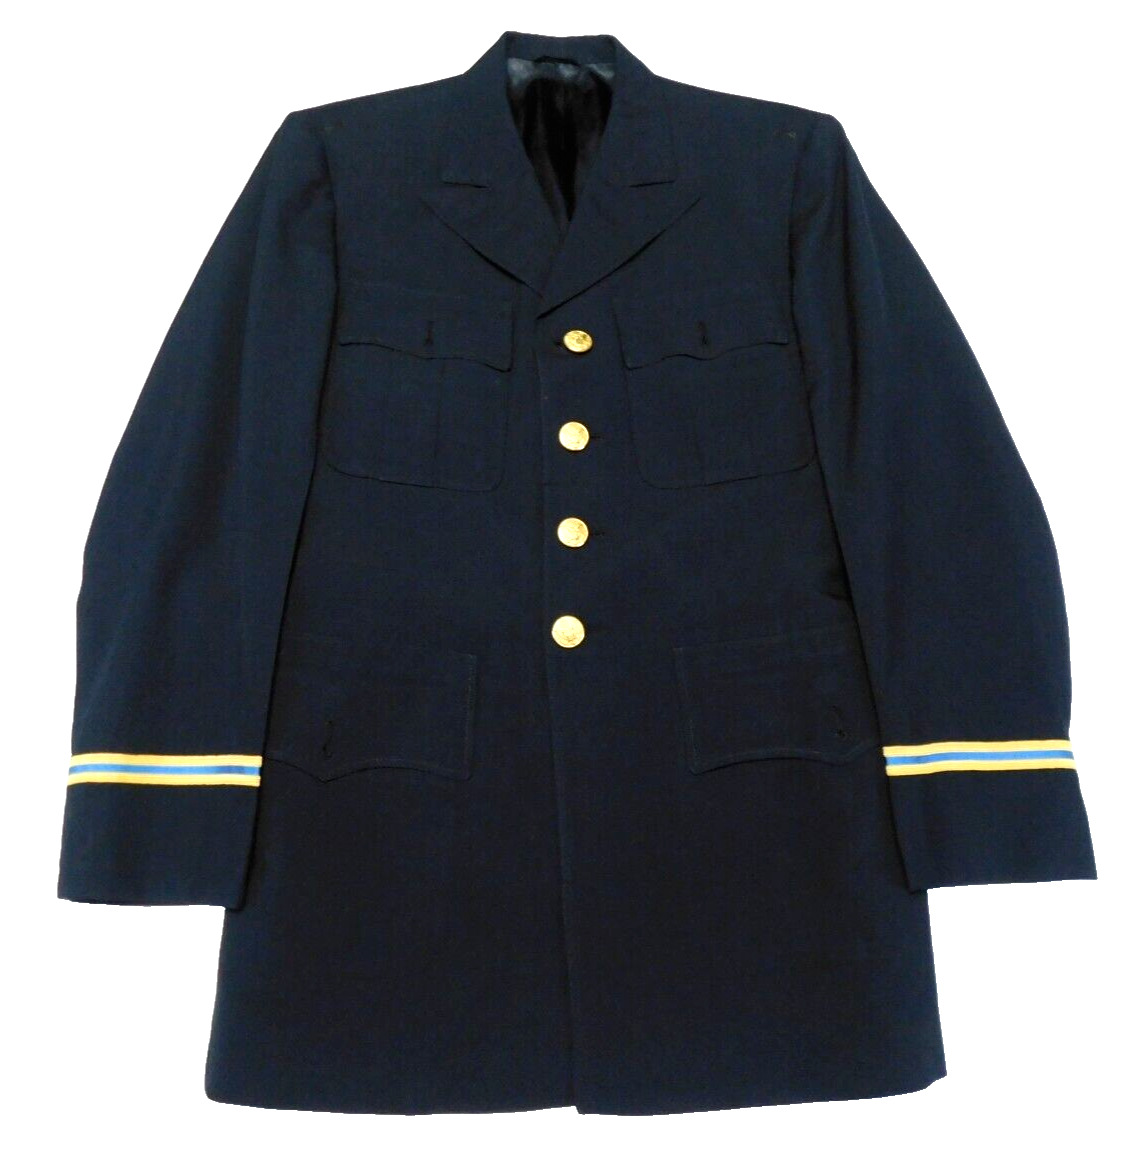 Vietnam US Army Officer Coat ASU 40 Dress Blue Jacket Named Intelligence Uniform